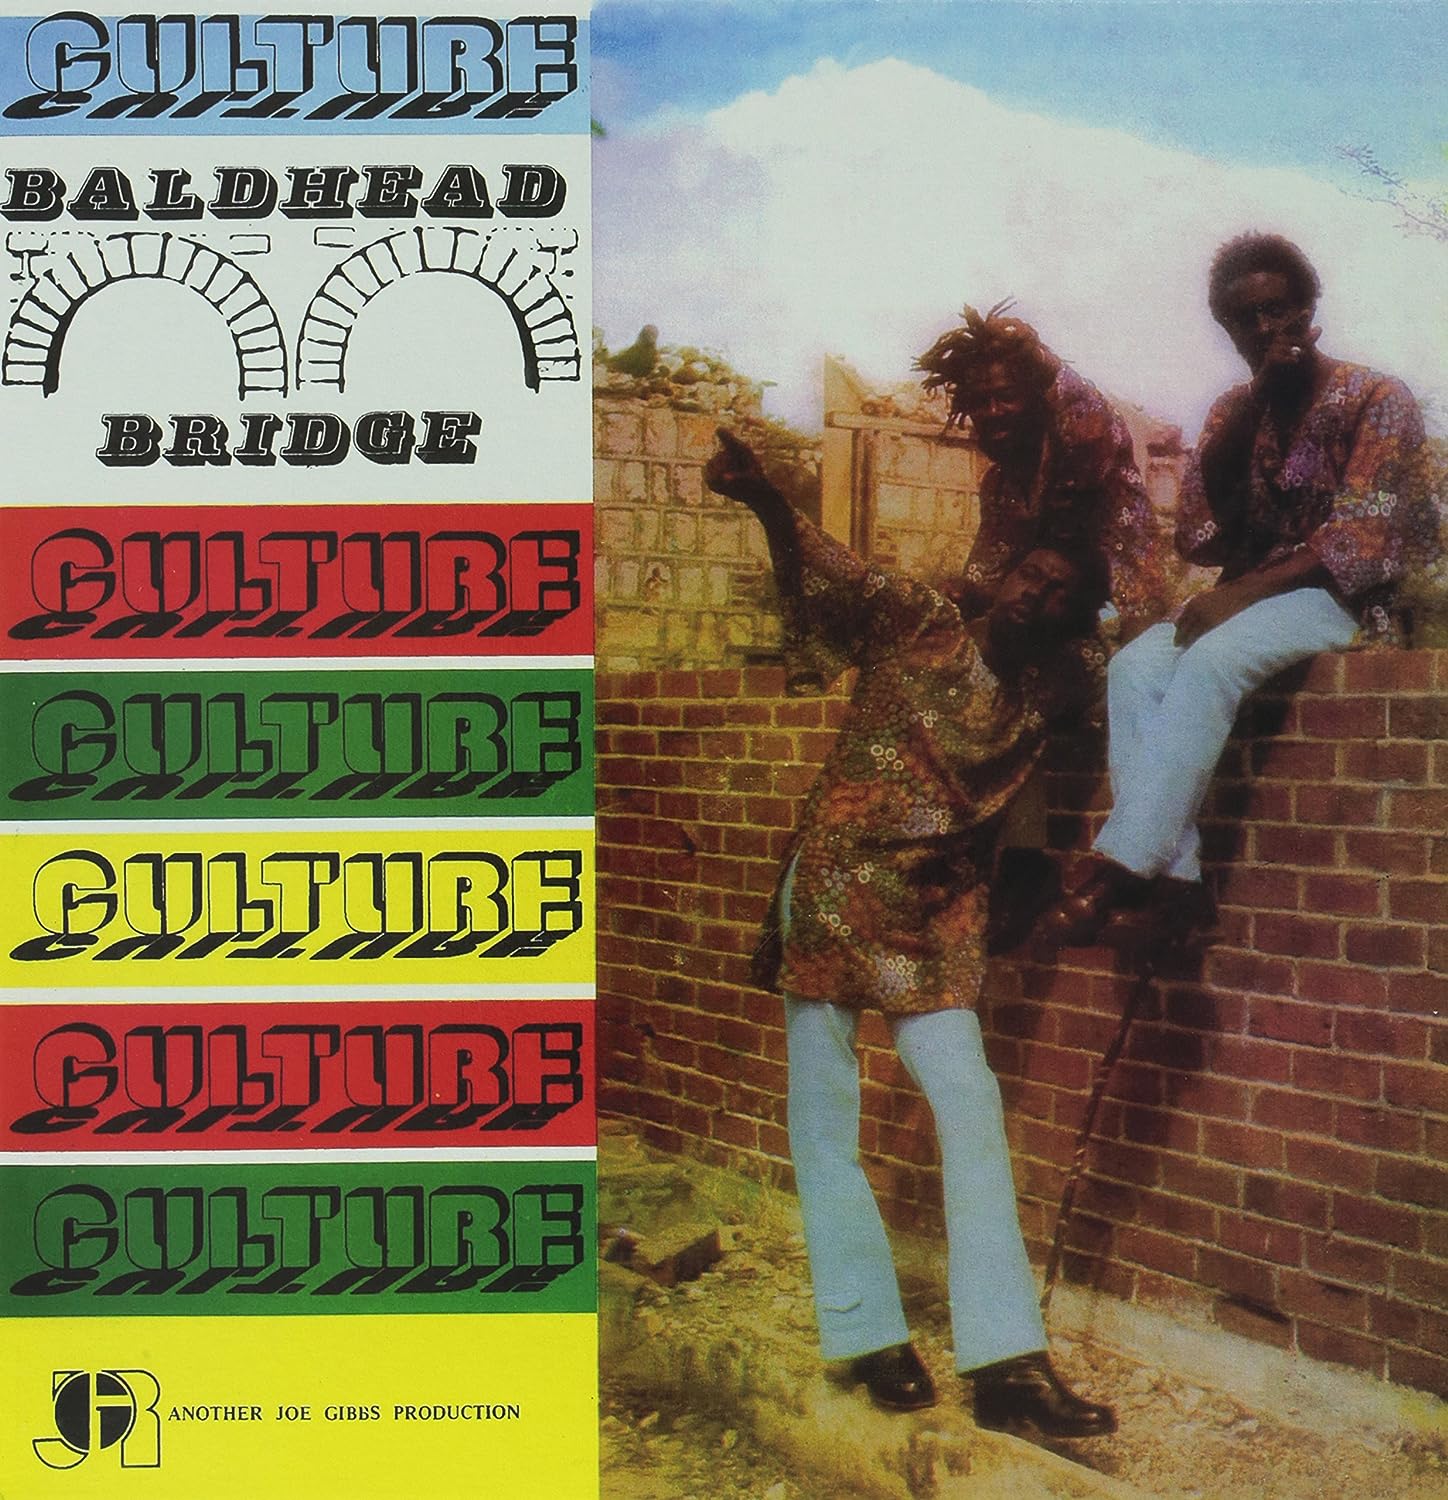 CULTURE - BALDHEAD BRIDGE Vinyl LP